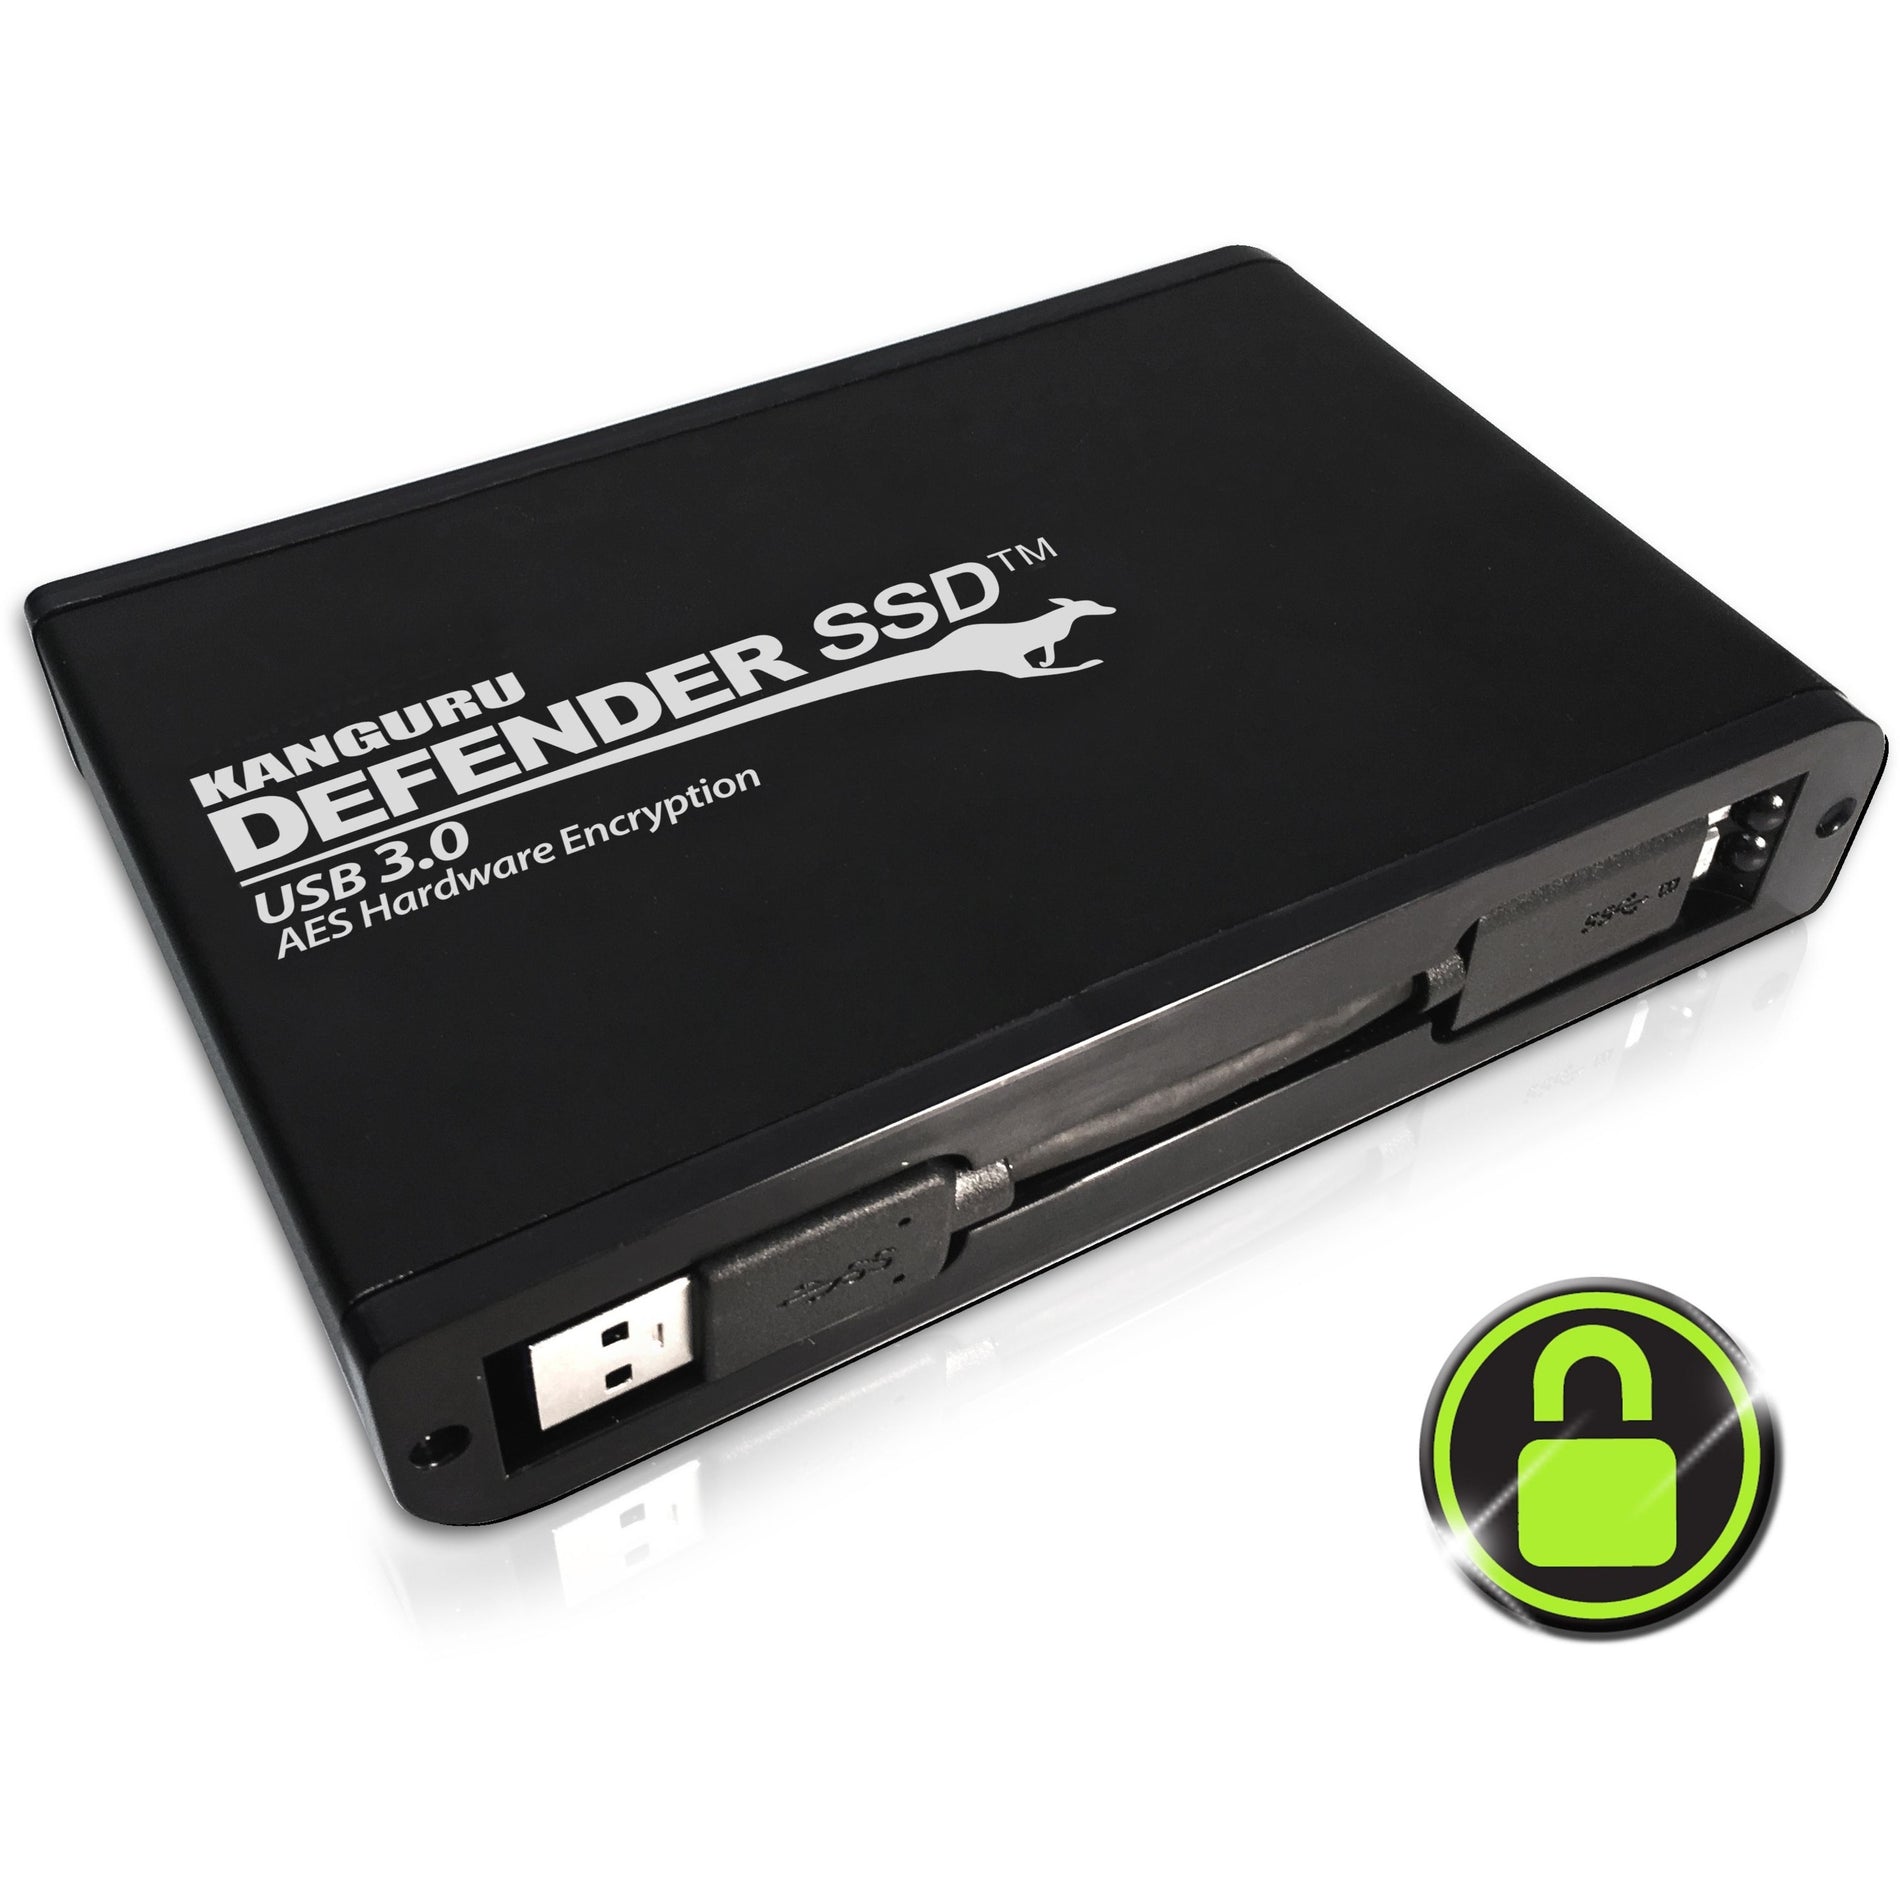 Kanguru KDH3B-35-1TSSD Defender SSD 35, 1TB, 256-Bit Hardware Encrypted External Solid State Drive